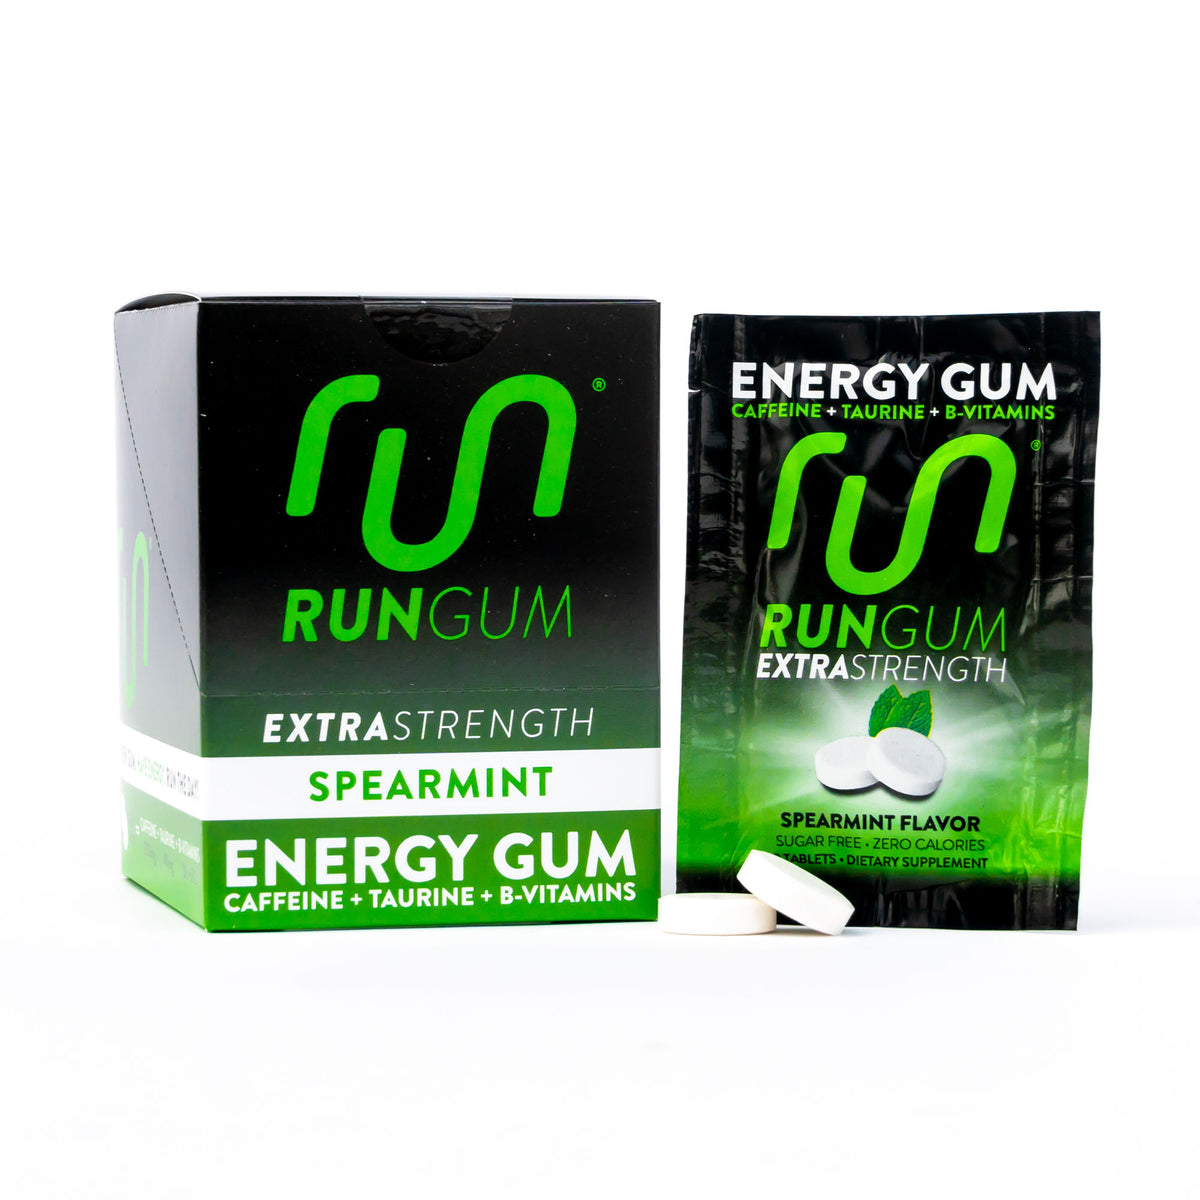 Energy Gum Original - RRCA Discount